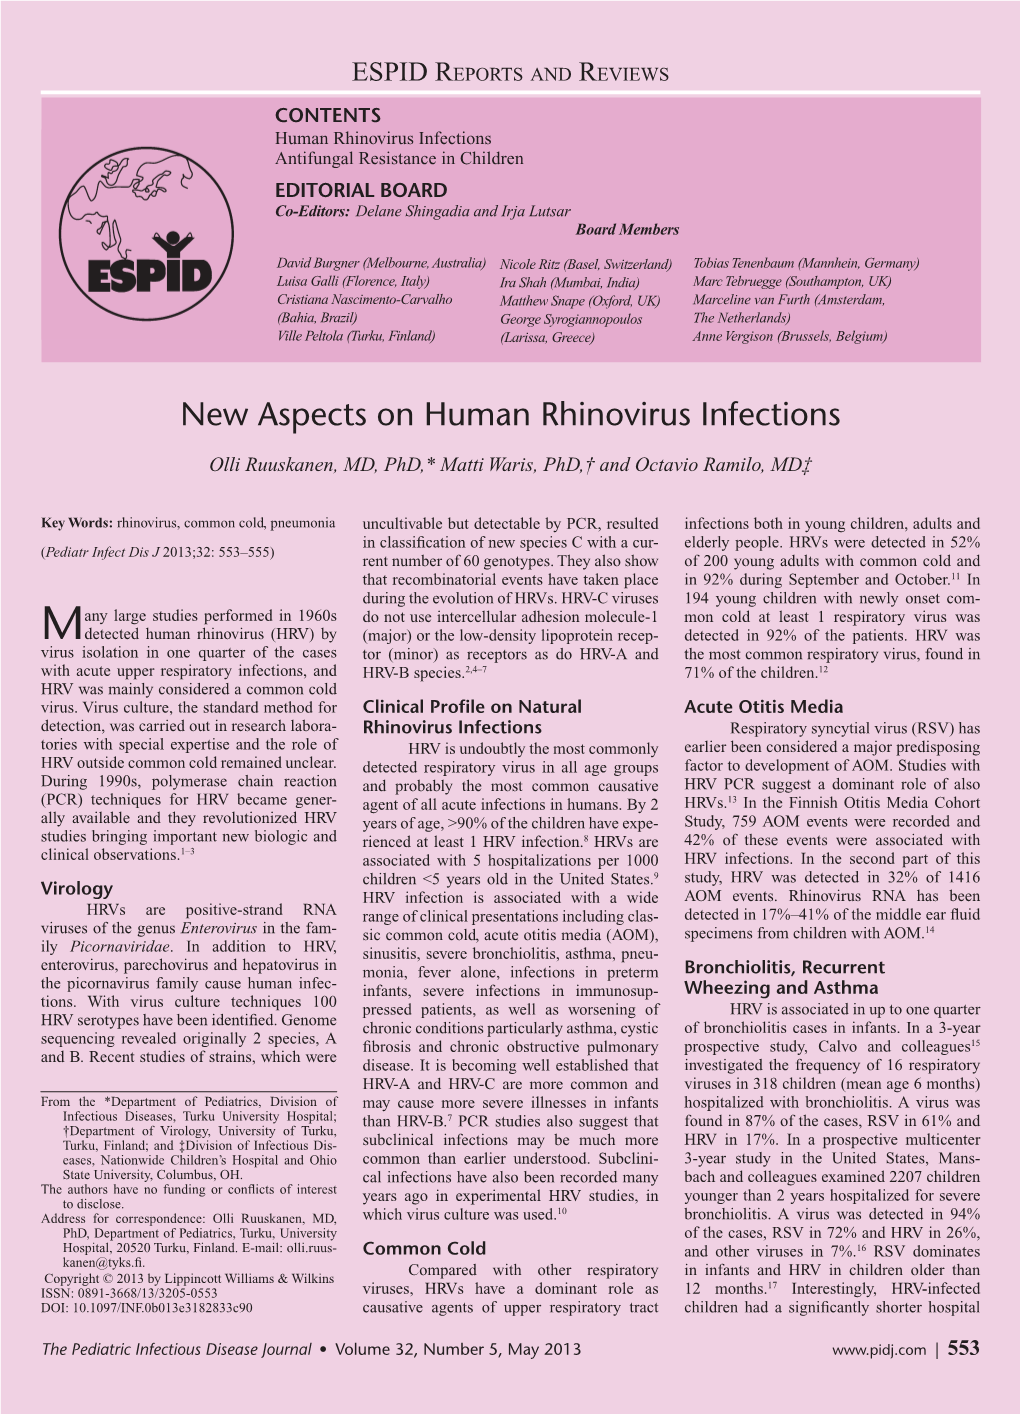 New Aspects on Human Rhinovirus Infections